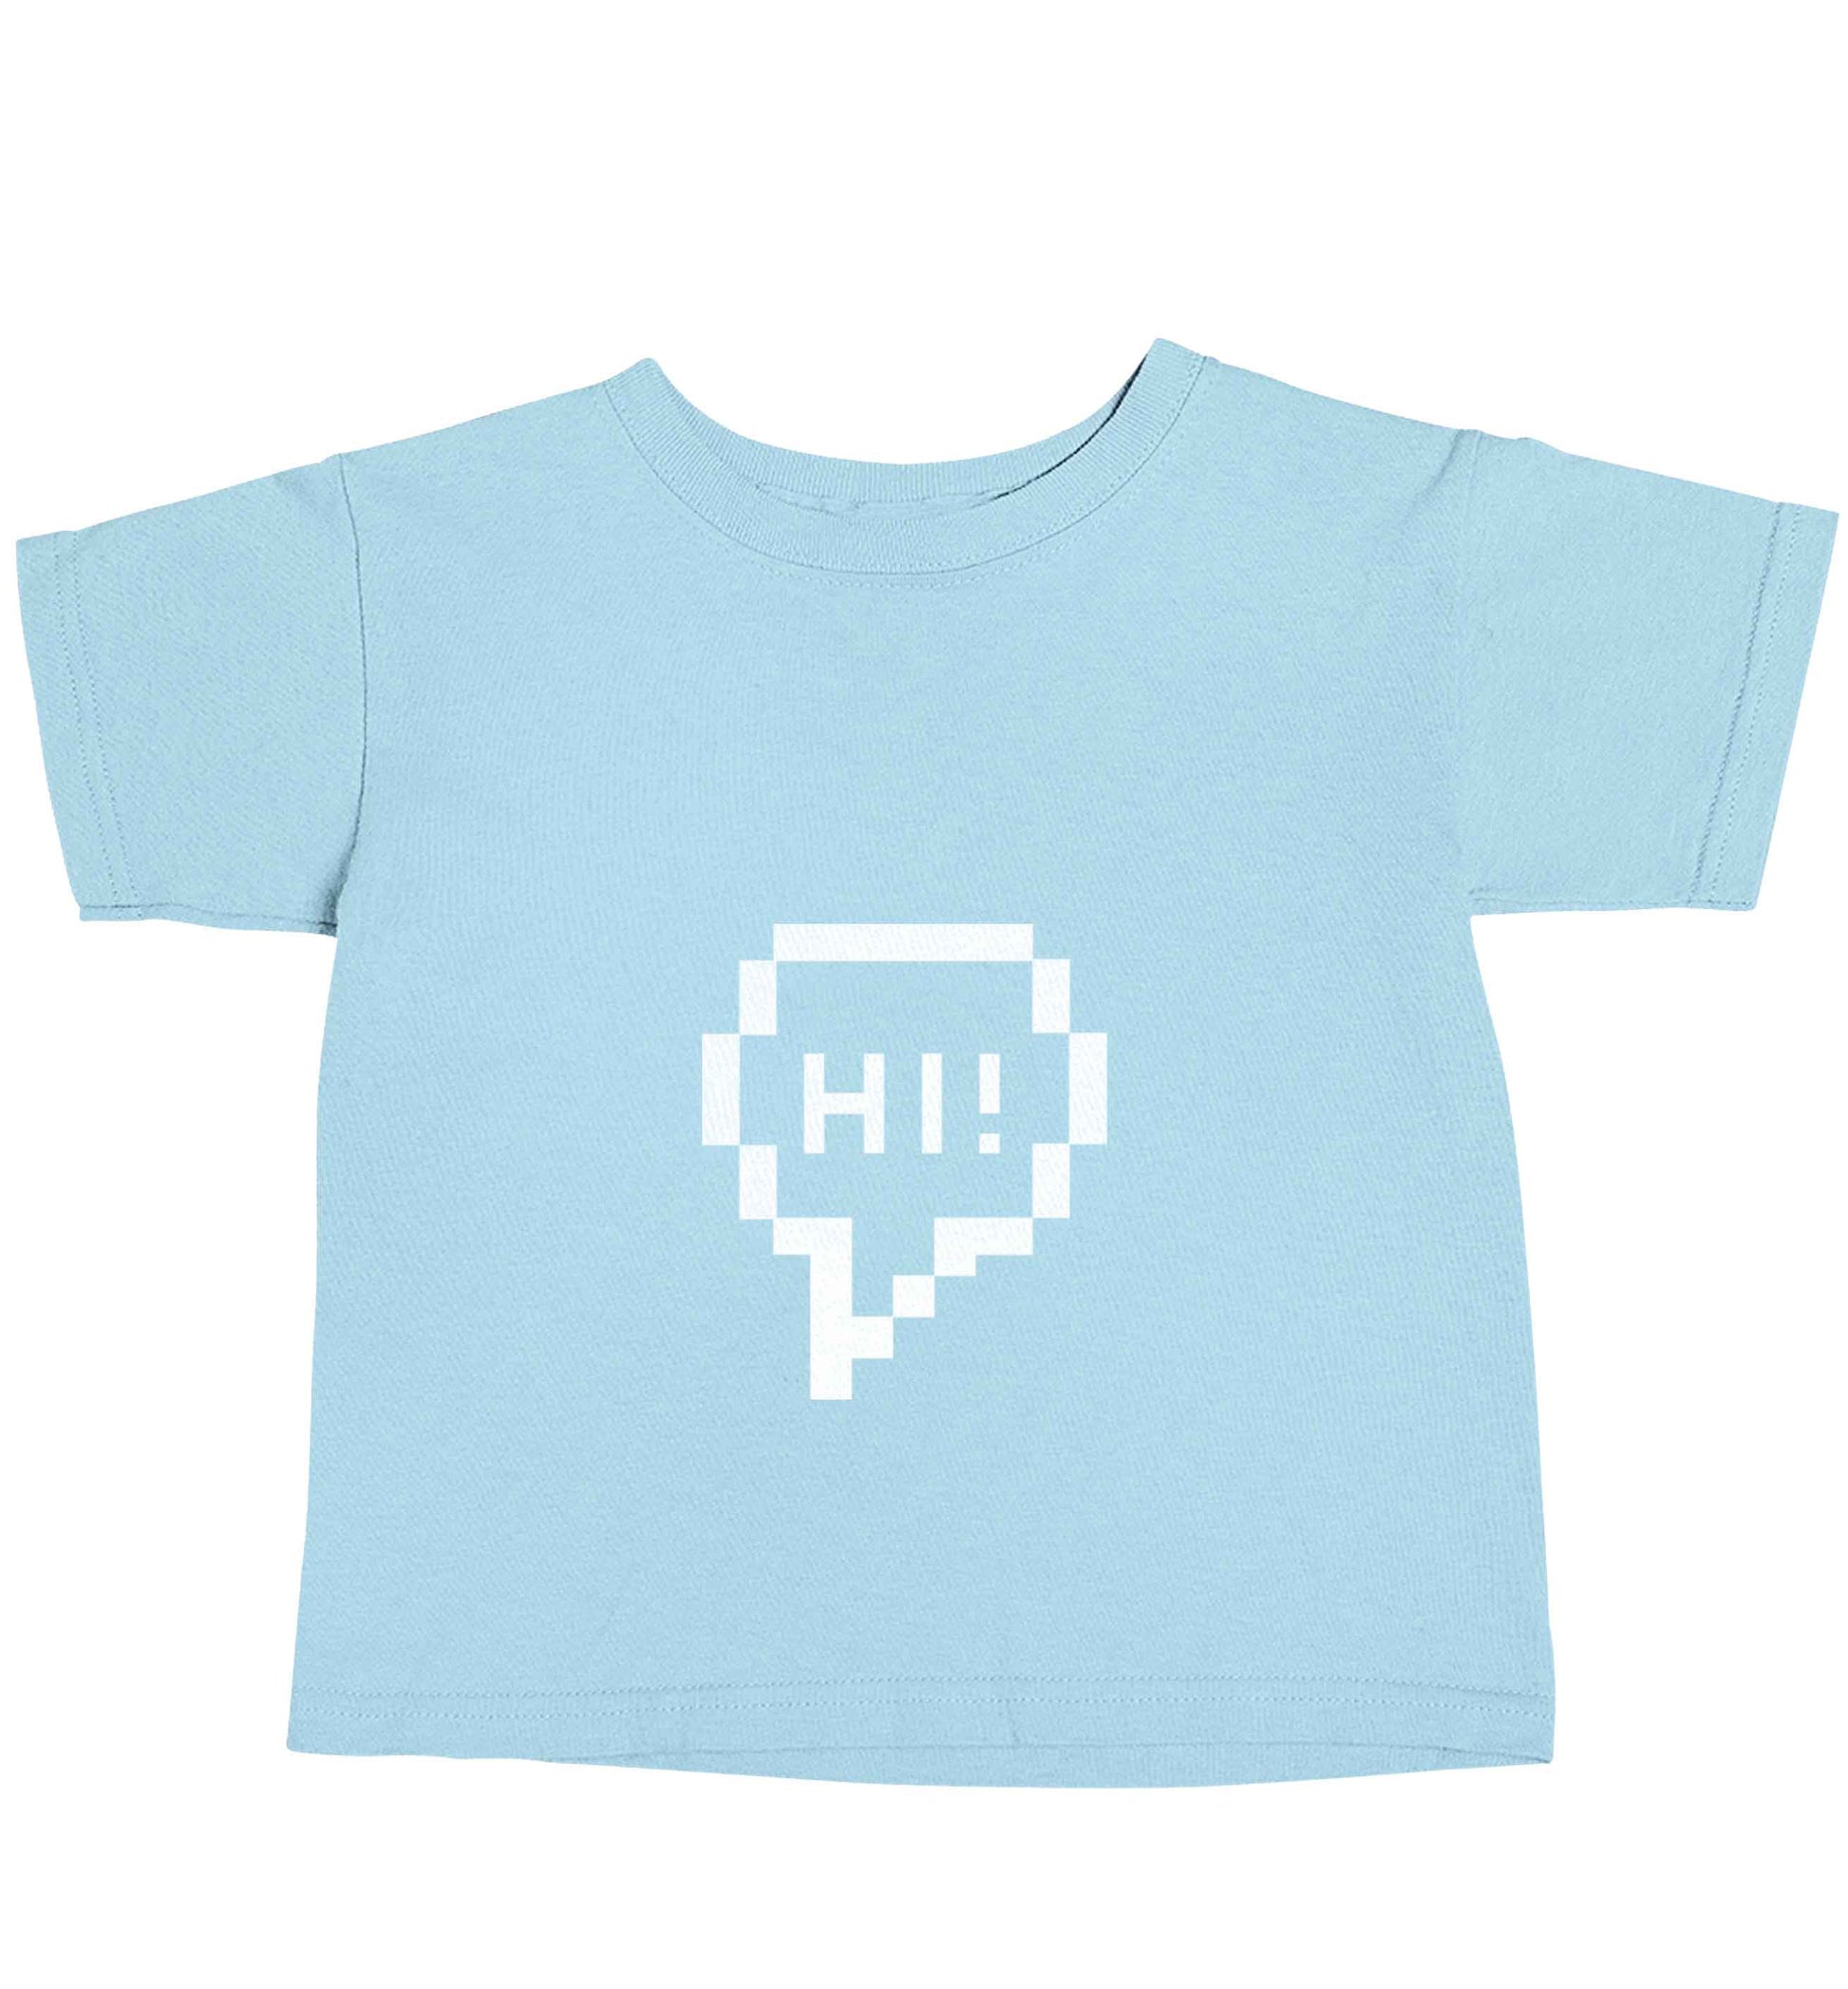 Hi light blue baby toddler Tshirt 2 Years